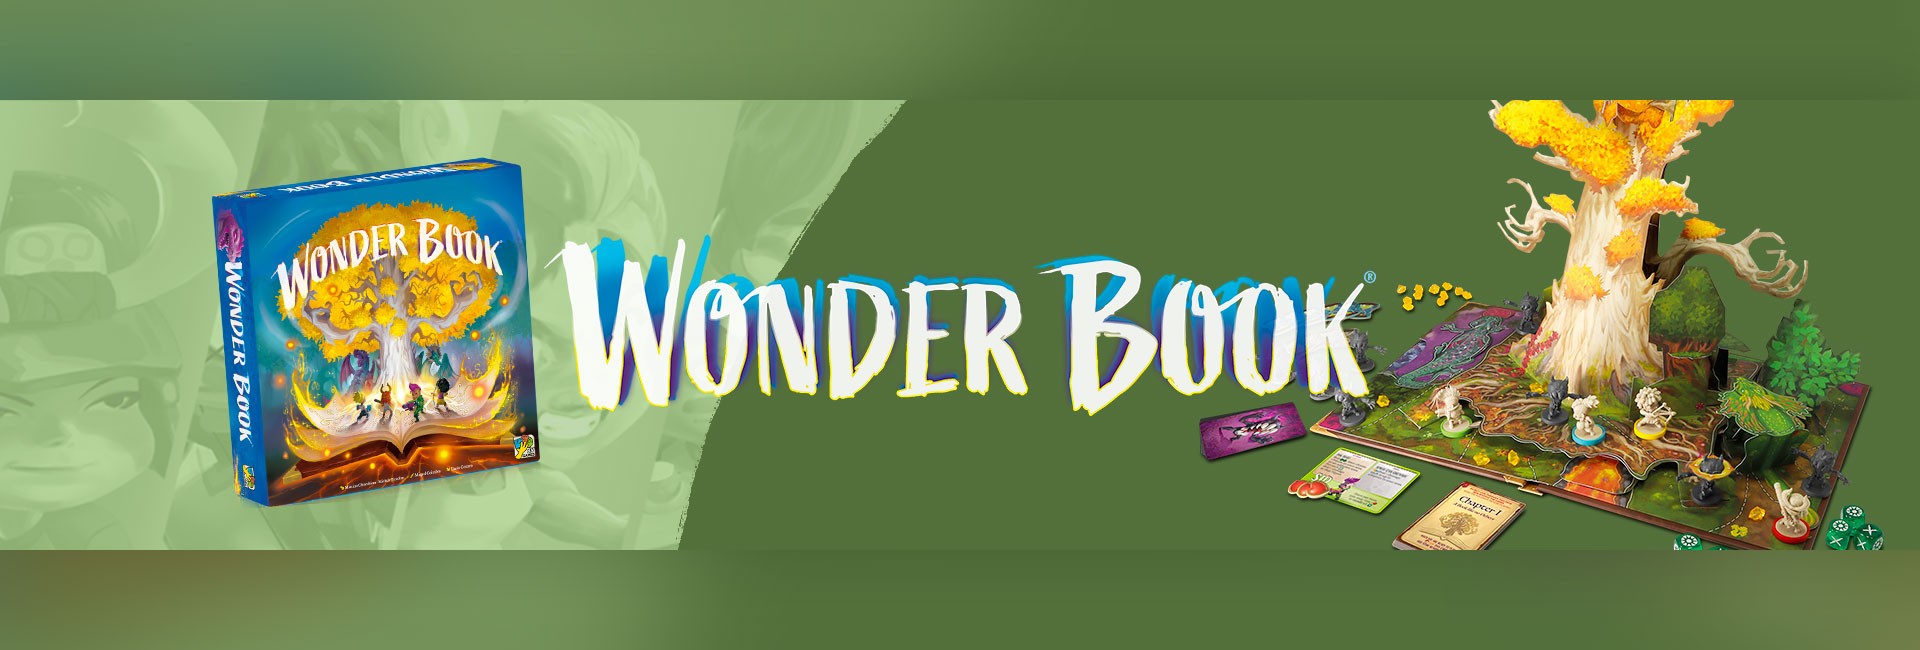 Le jeu de plateau coopératif Wonder Book